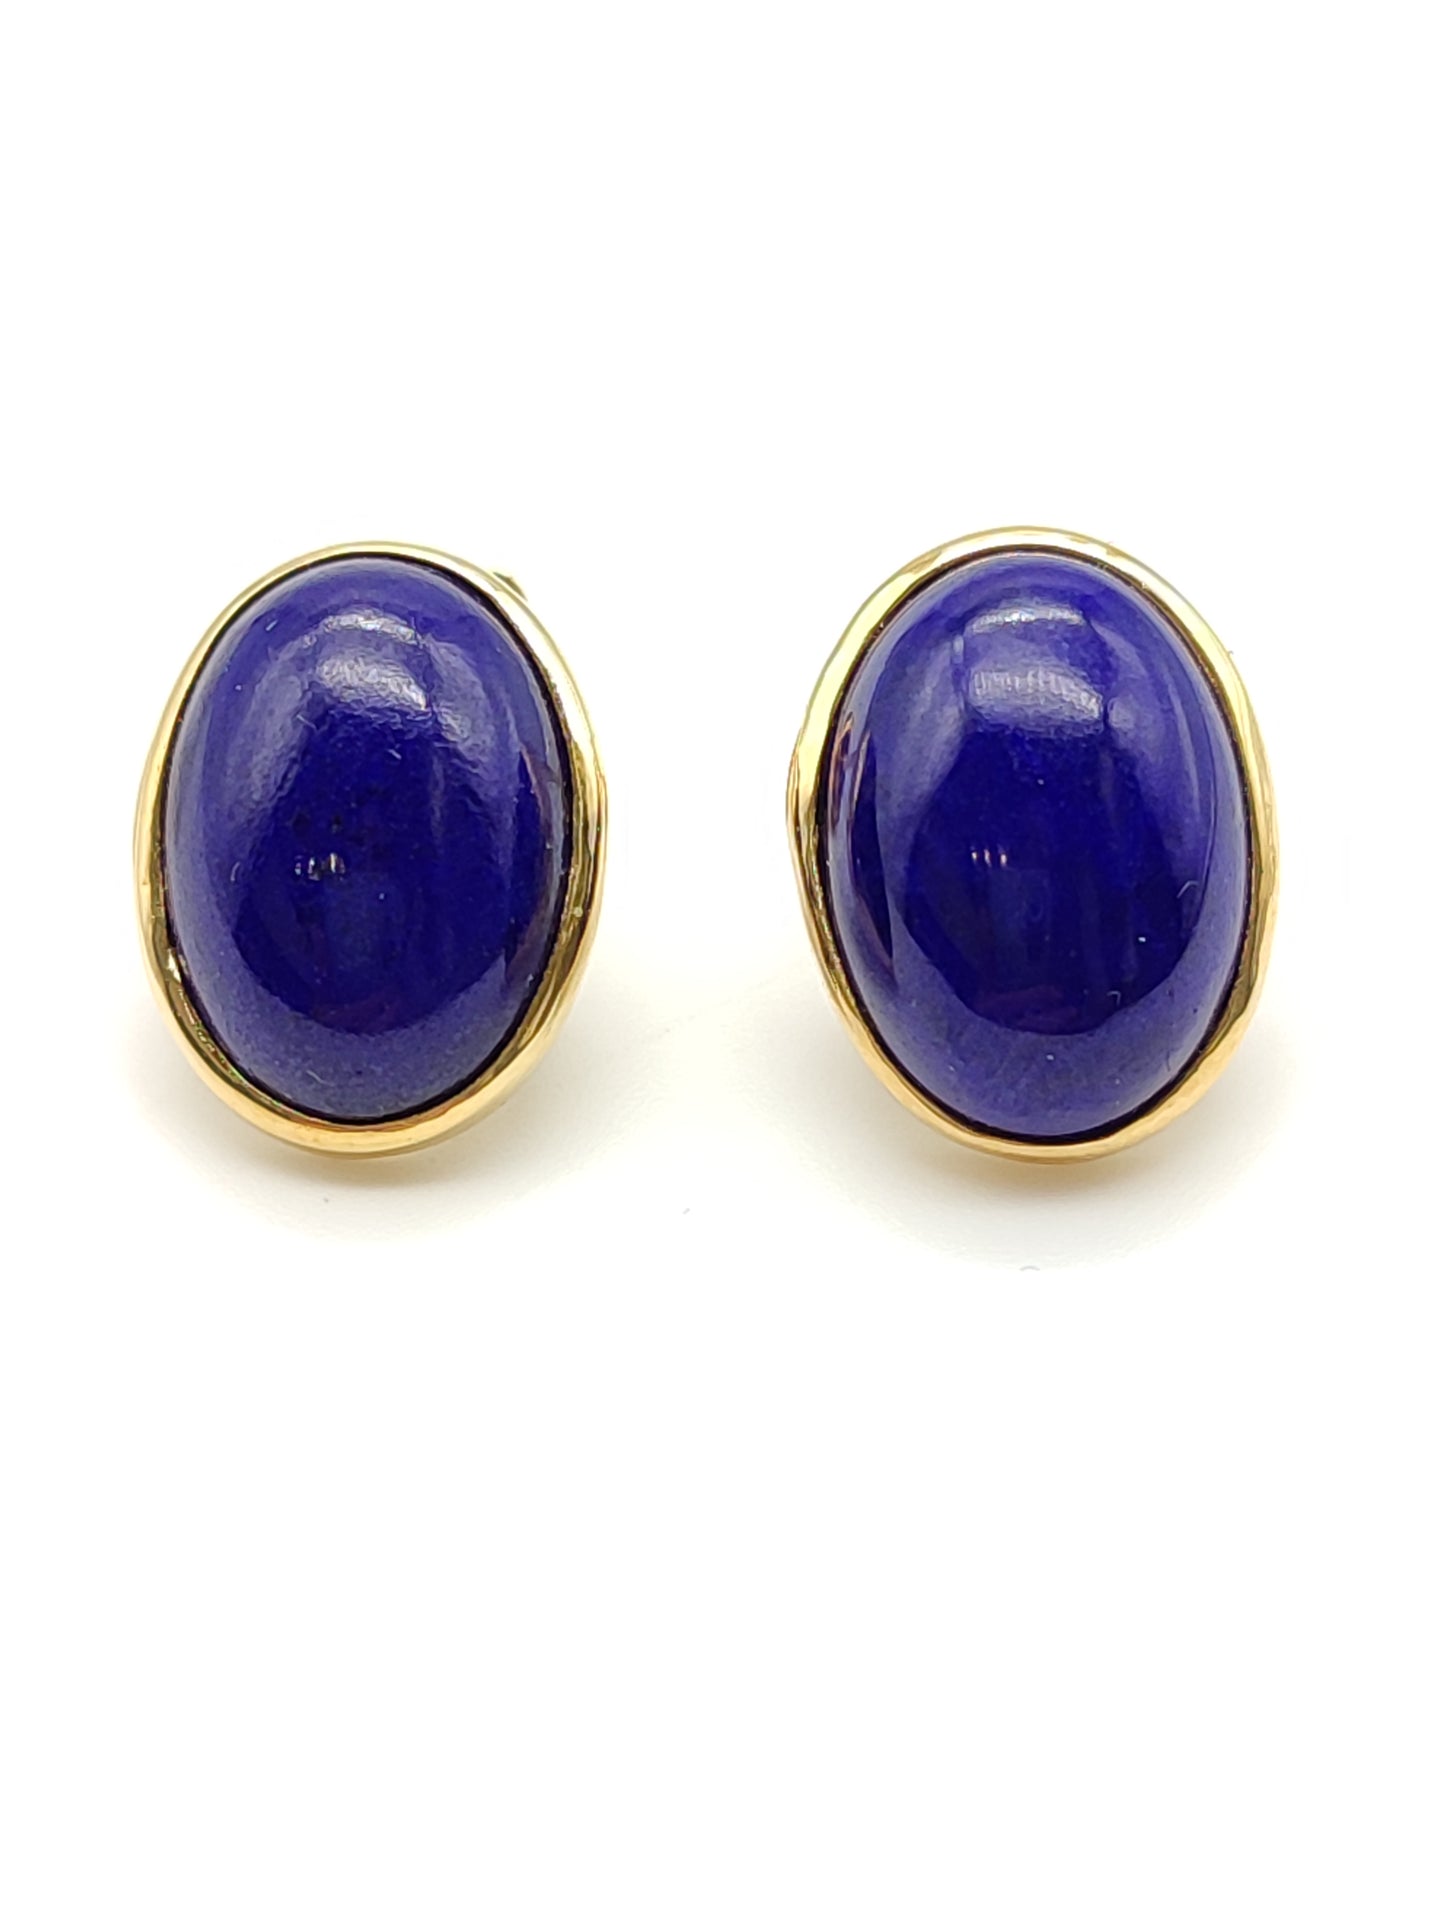 Stud earrings with lapis lazuli